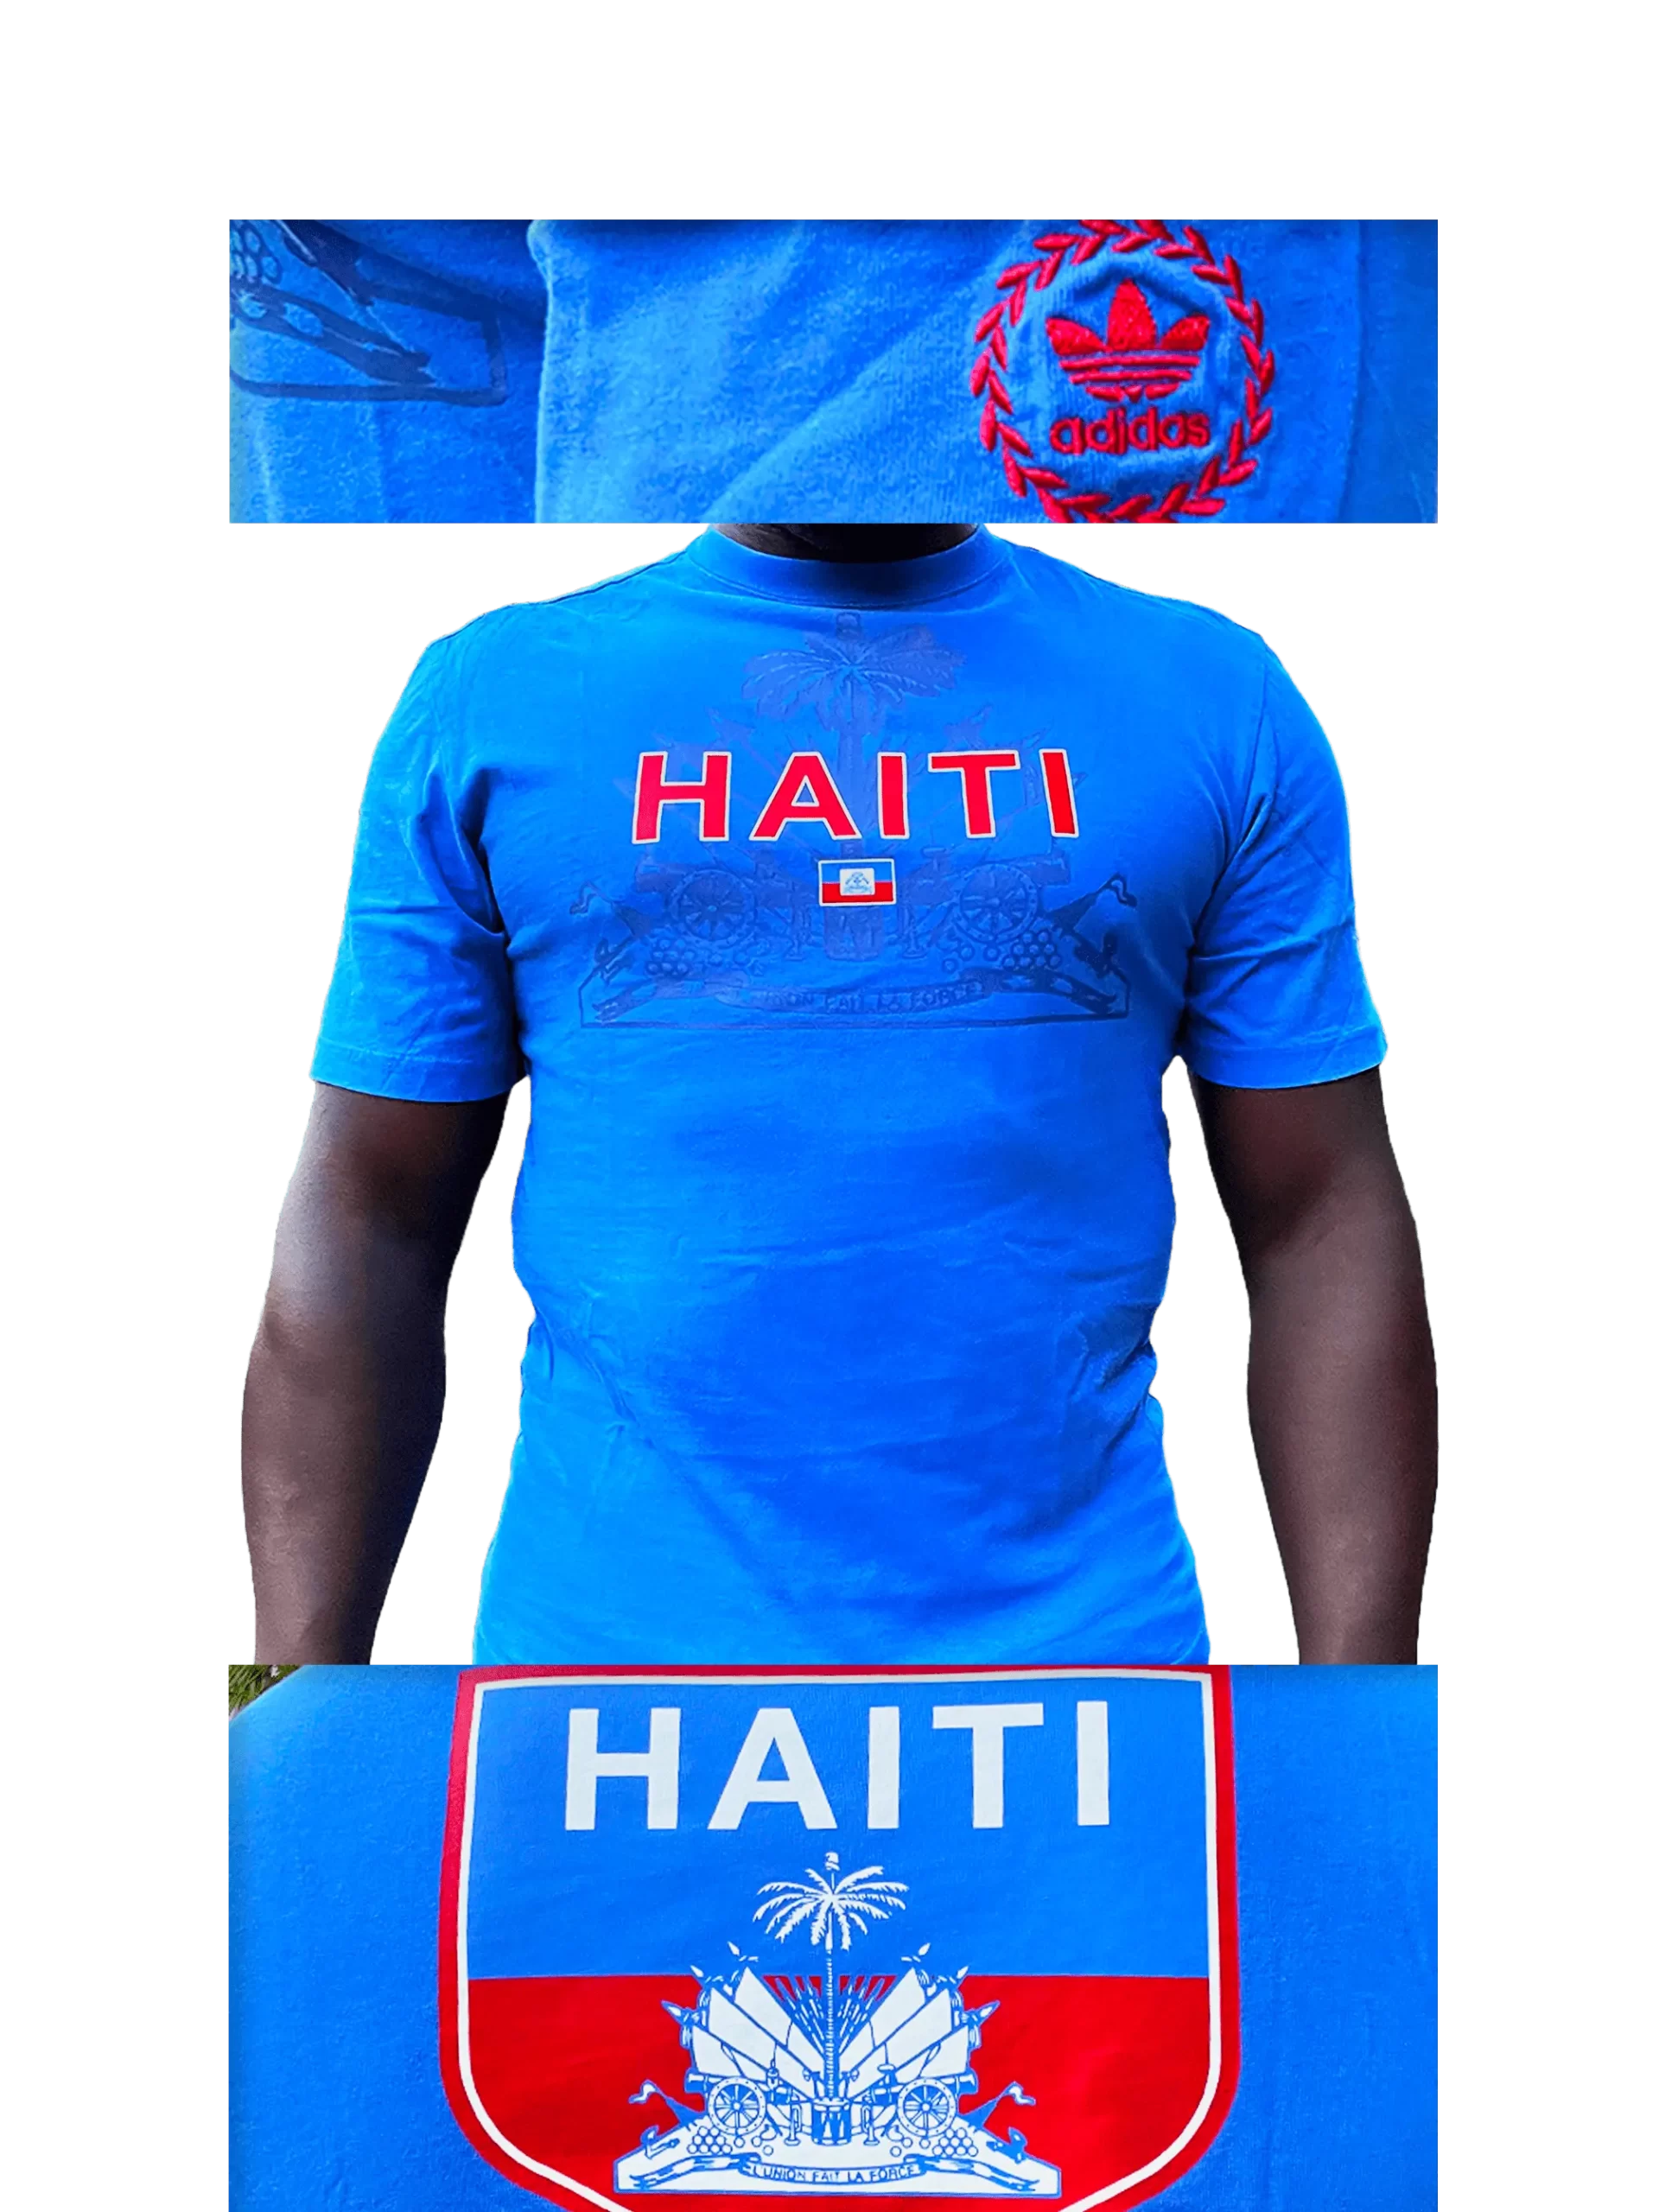 Men's 2007 Haiti T-Shirt by Adidas Originals: Uplifted